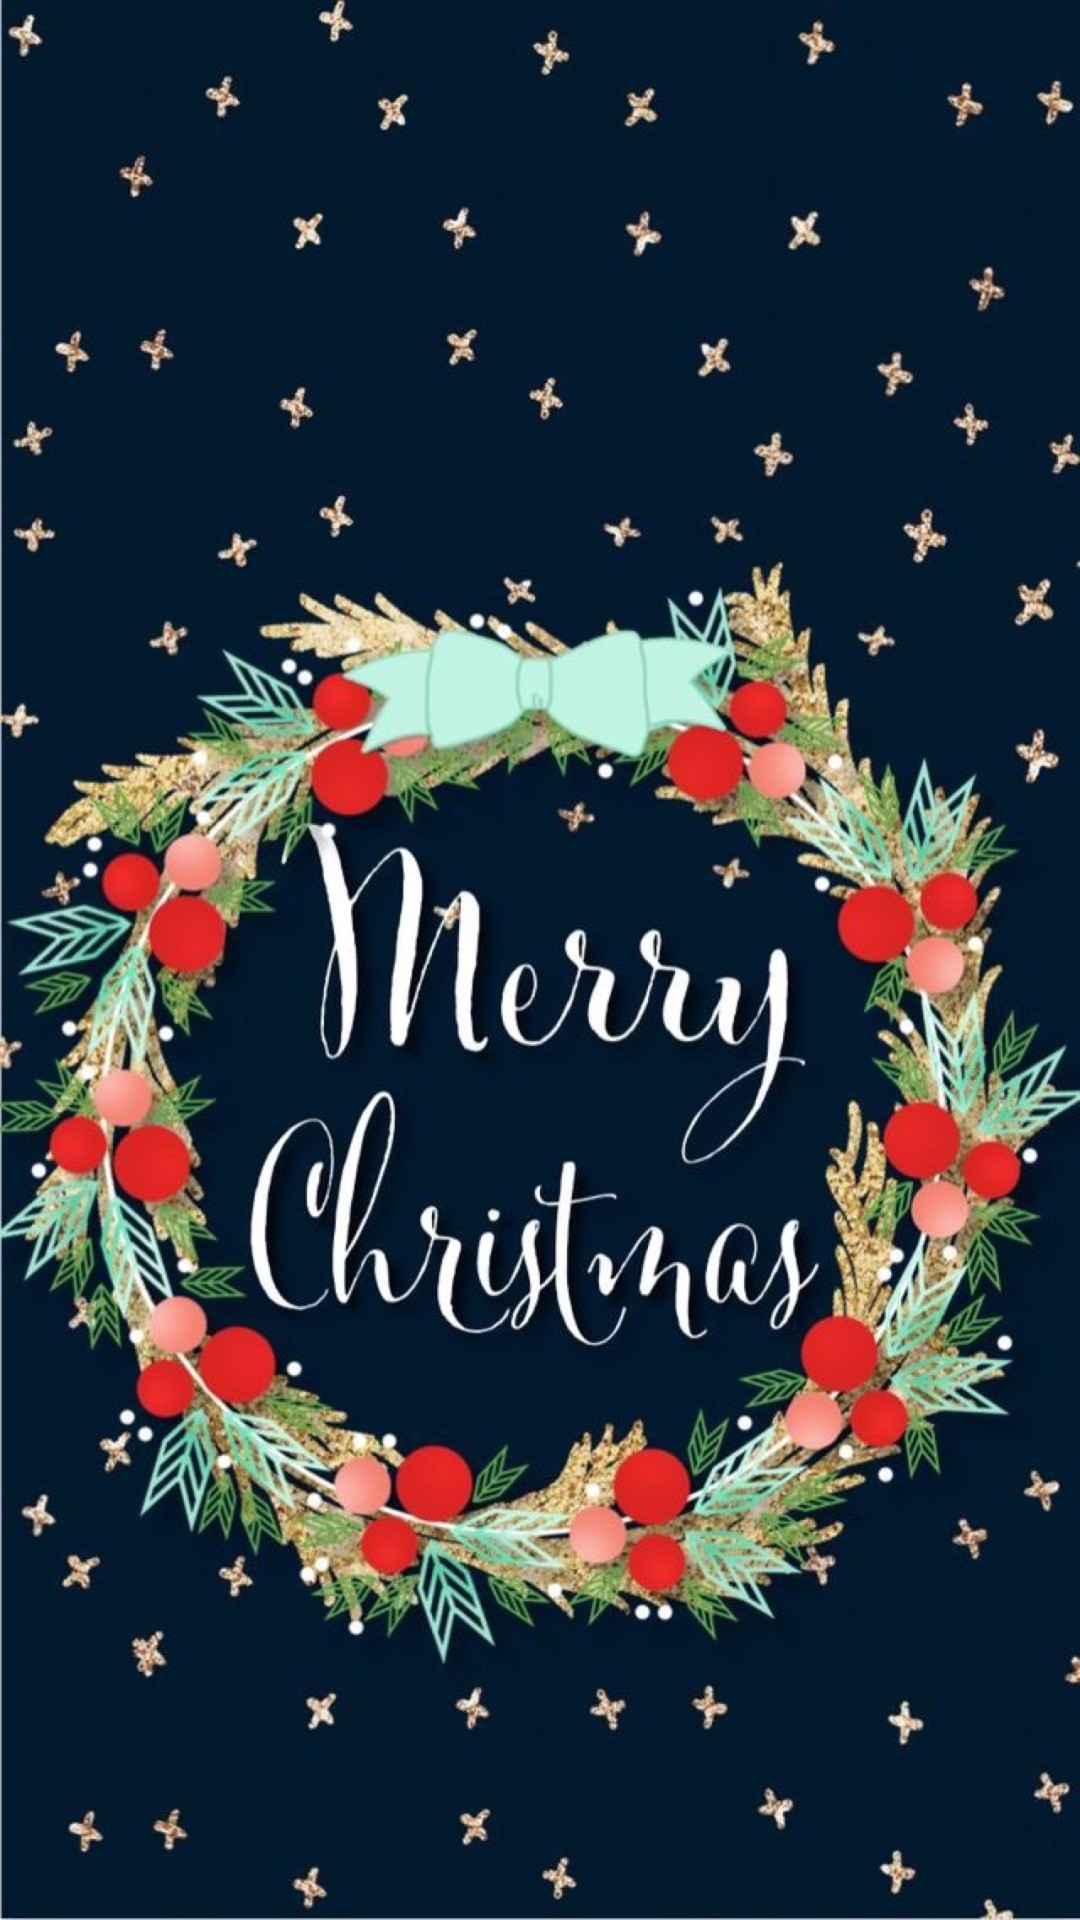 Christmas phone wallpaper ·① Download free beautiful